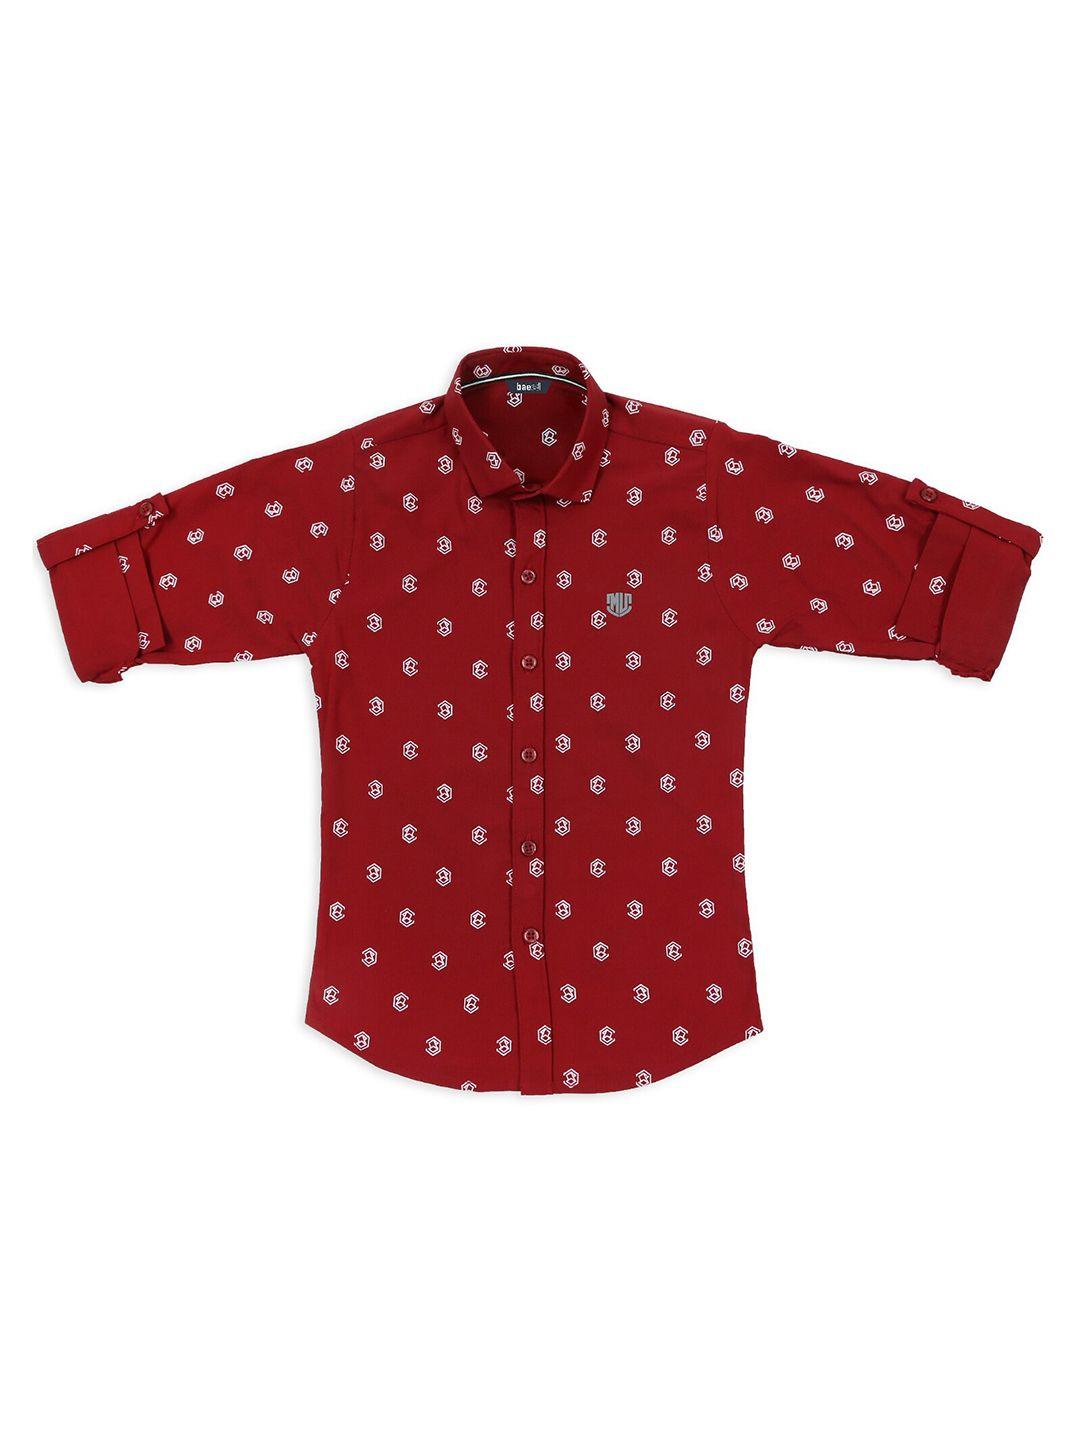 baesd-boys-classic-geometric-printed-spread-collar-long-sleeves-cotton-casual-shirt